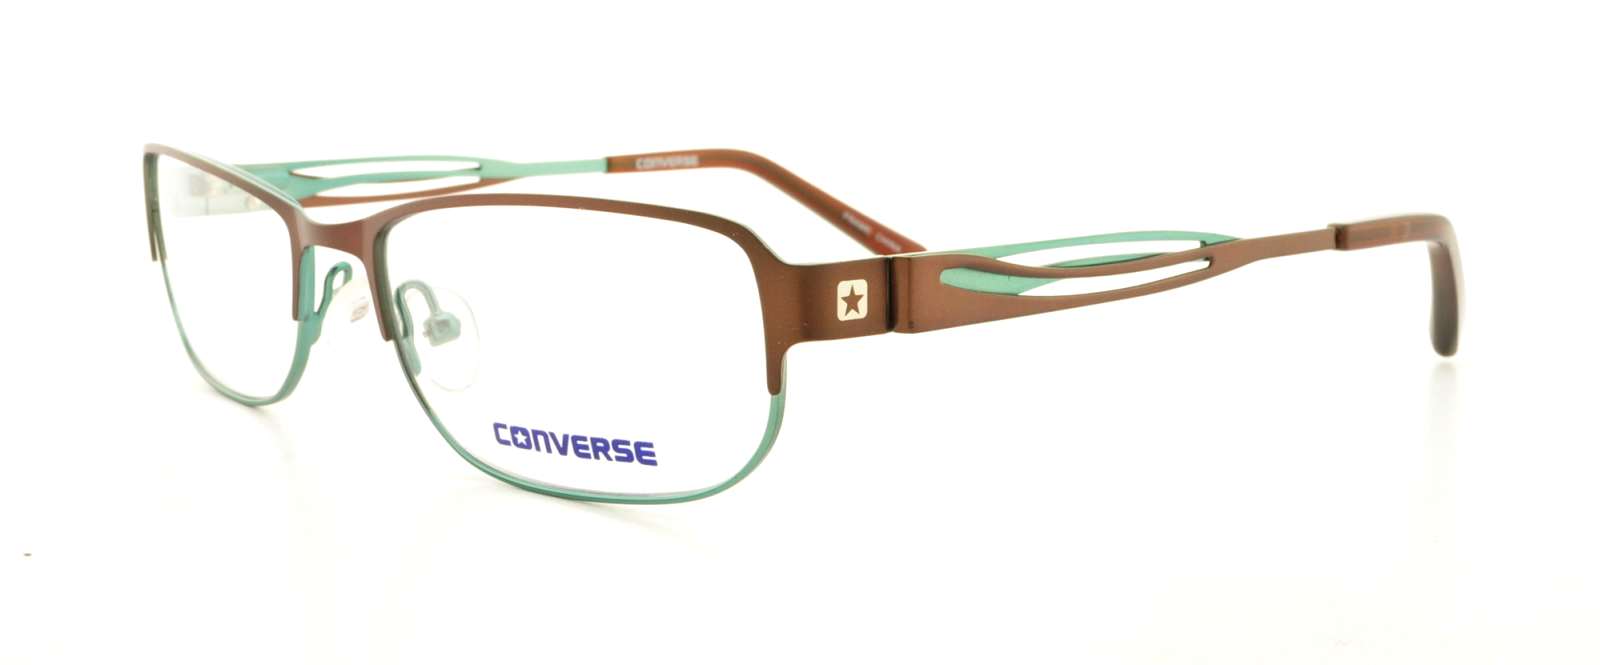 Designer Frames Outlet. Converse Eyeglasses SPRAY PAINT